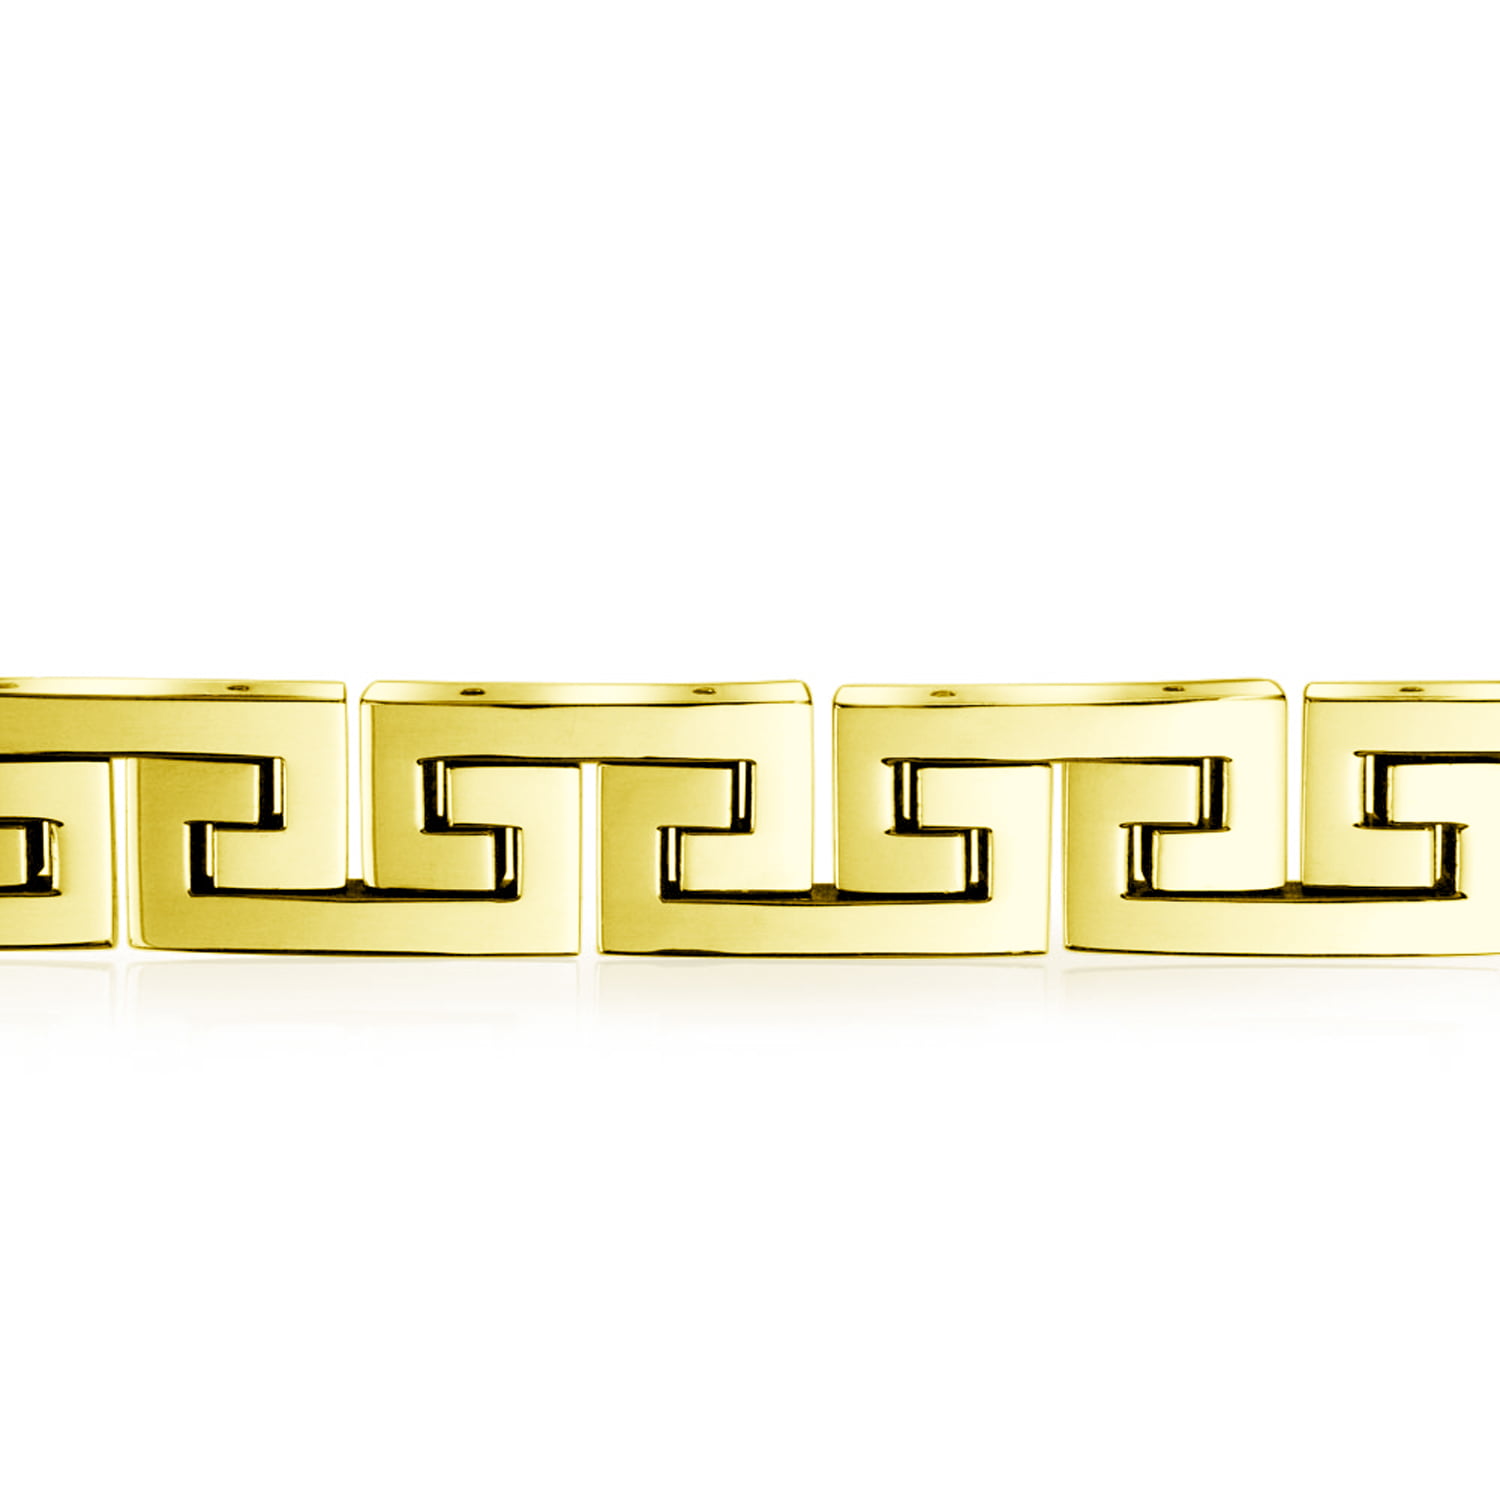 Bling Jewelry Strong Masculine Geometric Fancy Design Greek Key Pattern Symbol Link Bracelet for Teens Men Black Gold Silver Tone Stainless Steel Wristband 8.5 9 Inch 12MM